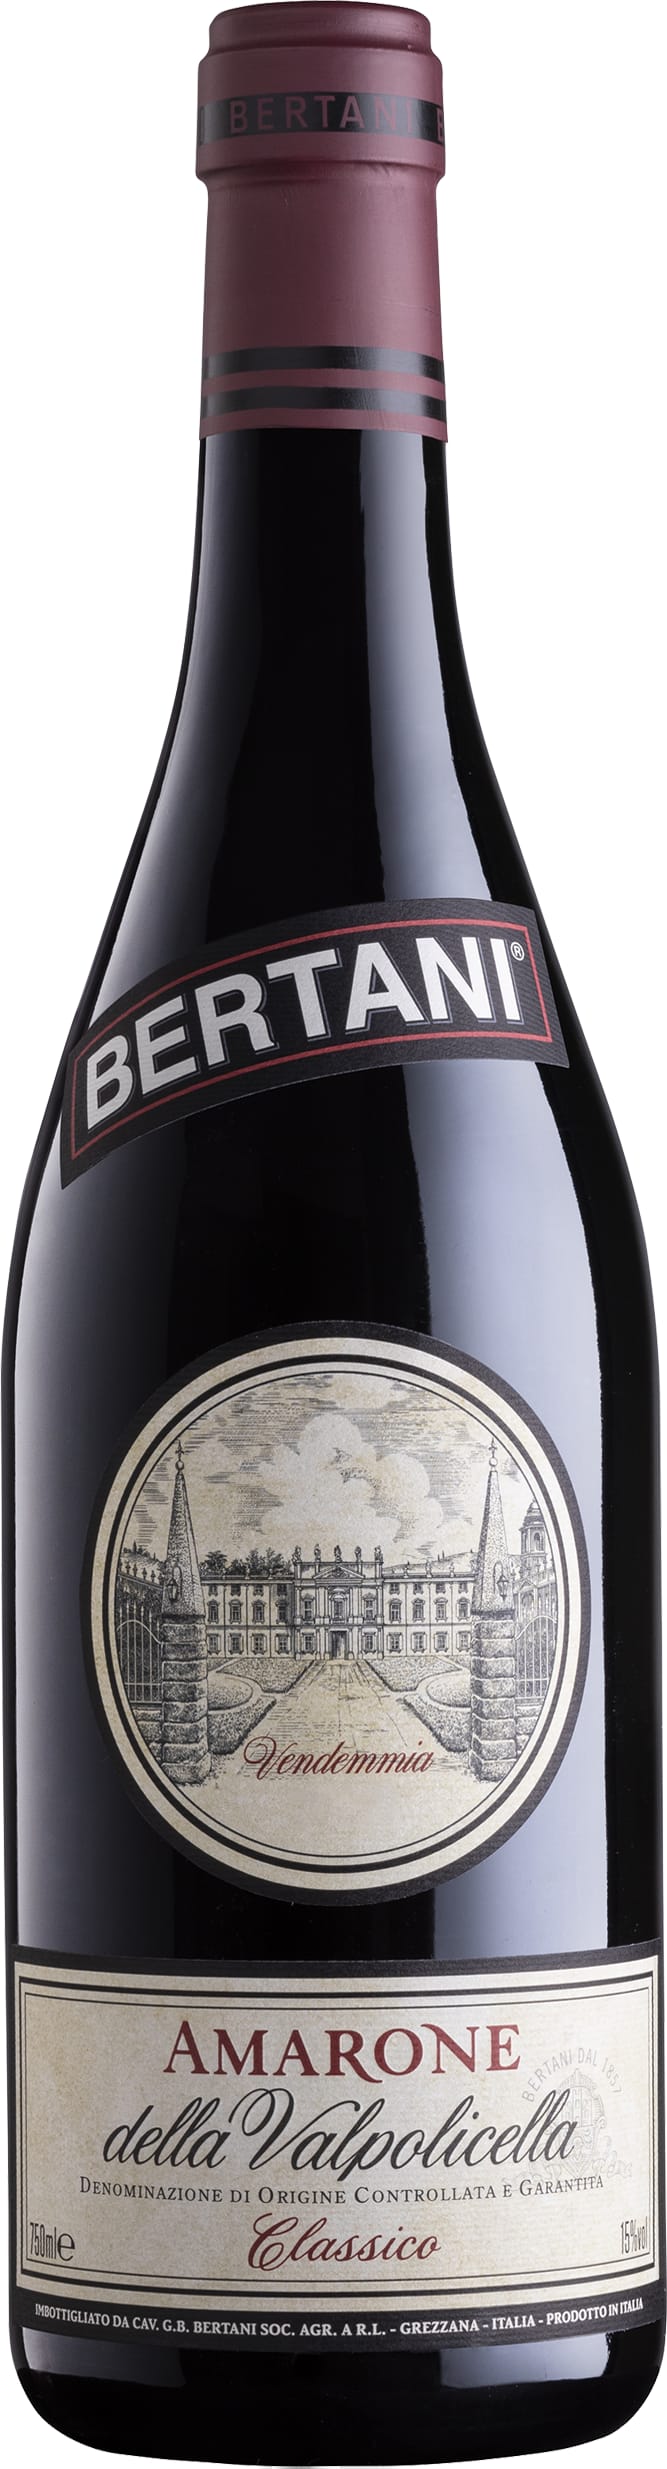 Bertani Amarone Classico 1980 75cl - Buy Bertani Wines from GREAT WINES DIRECT wine shop